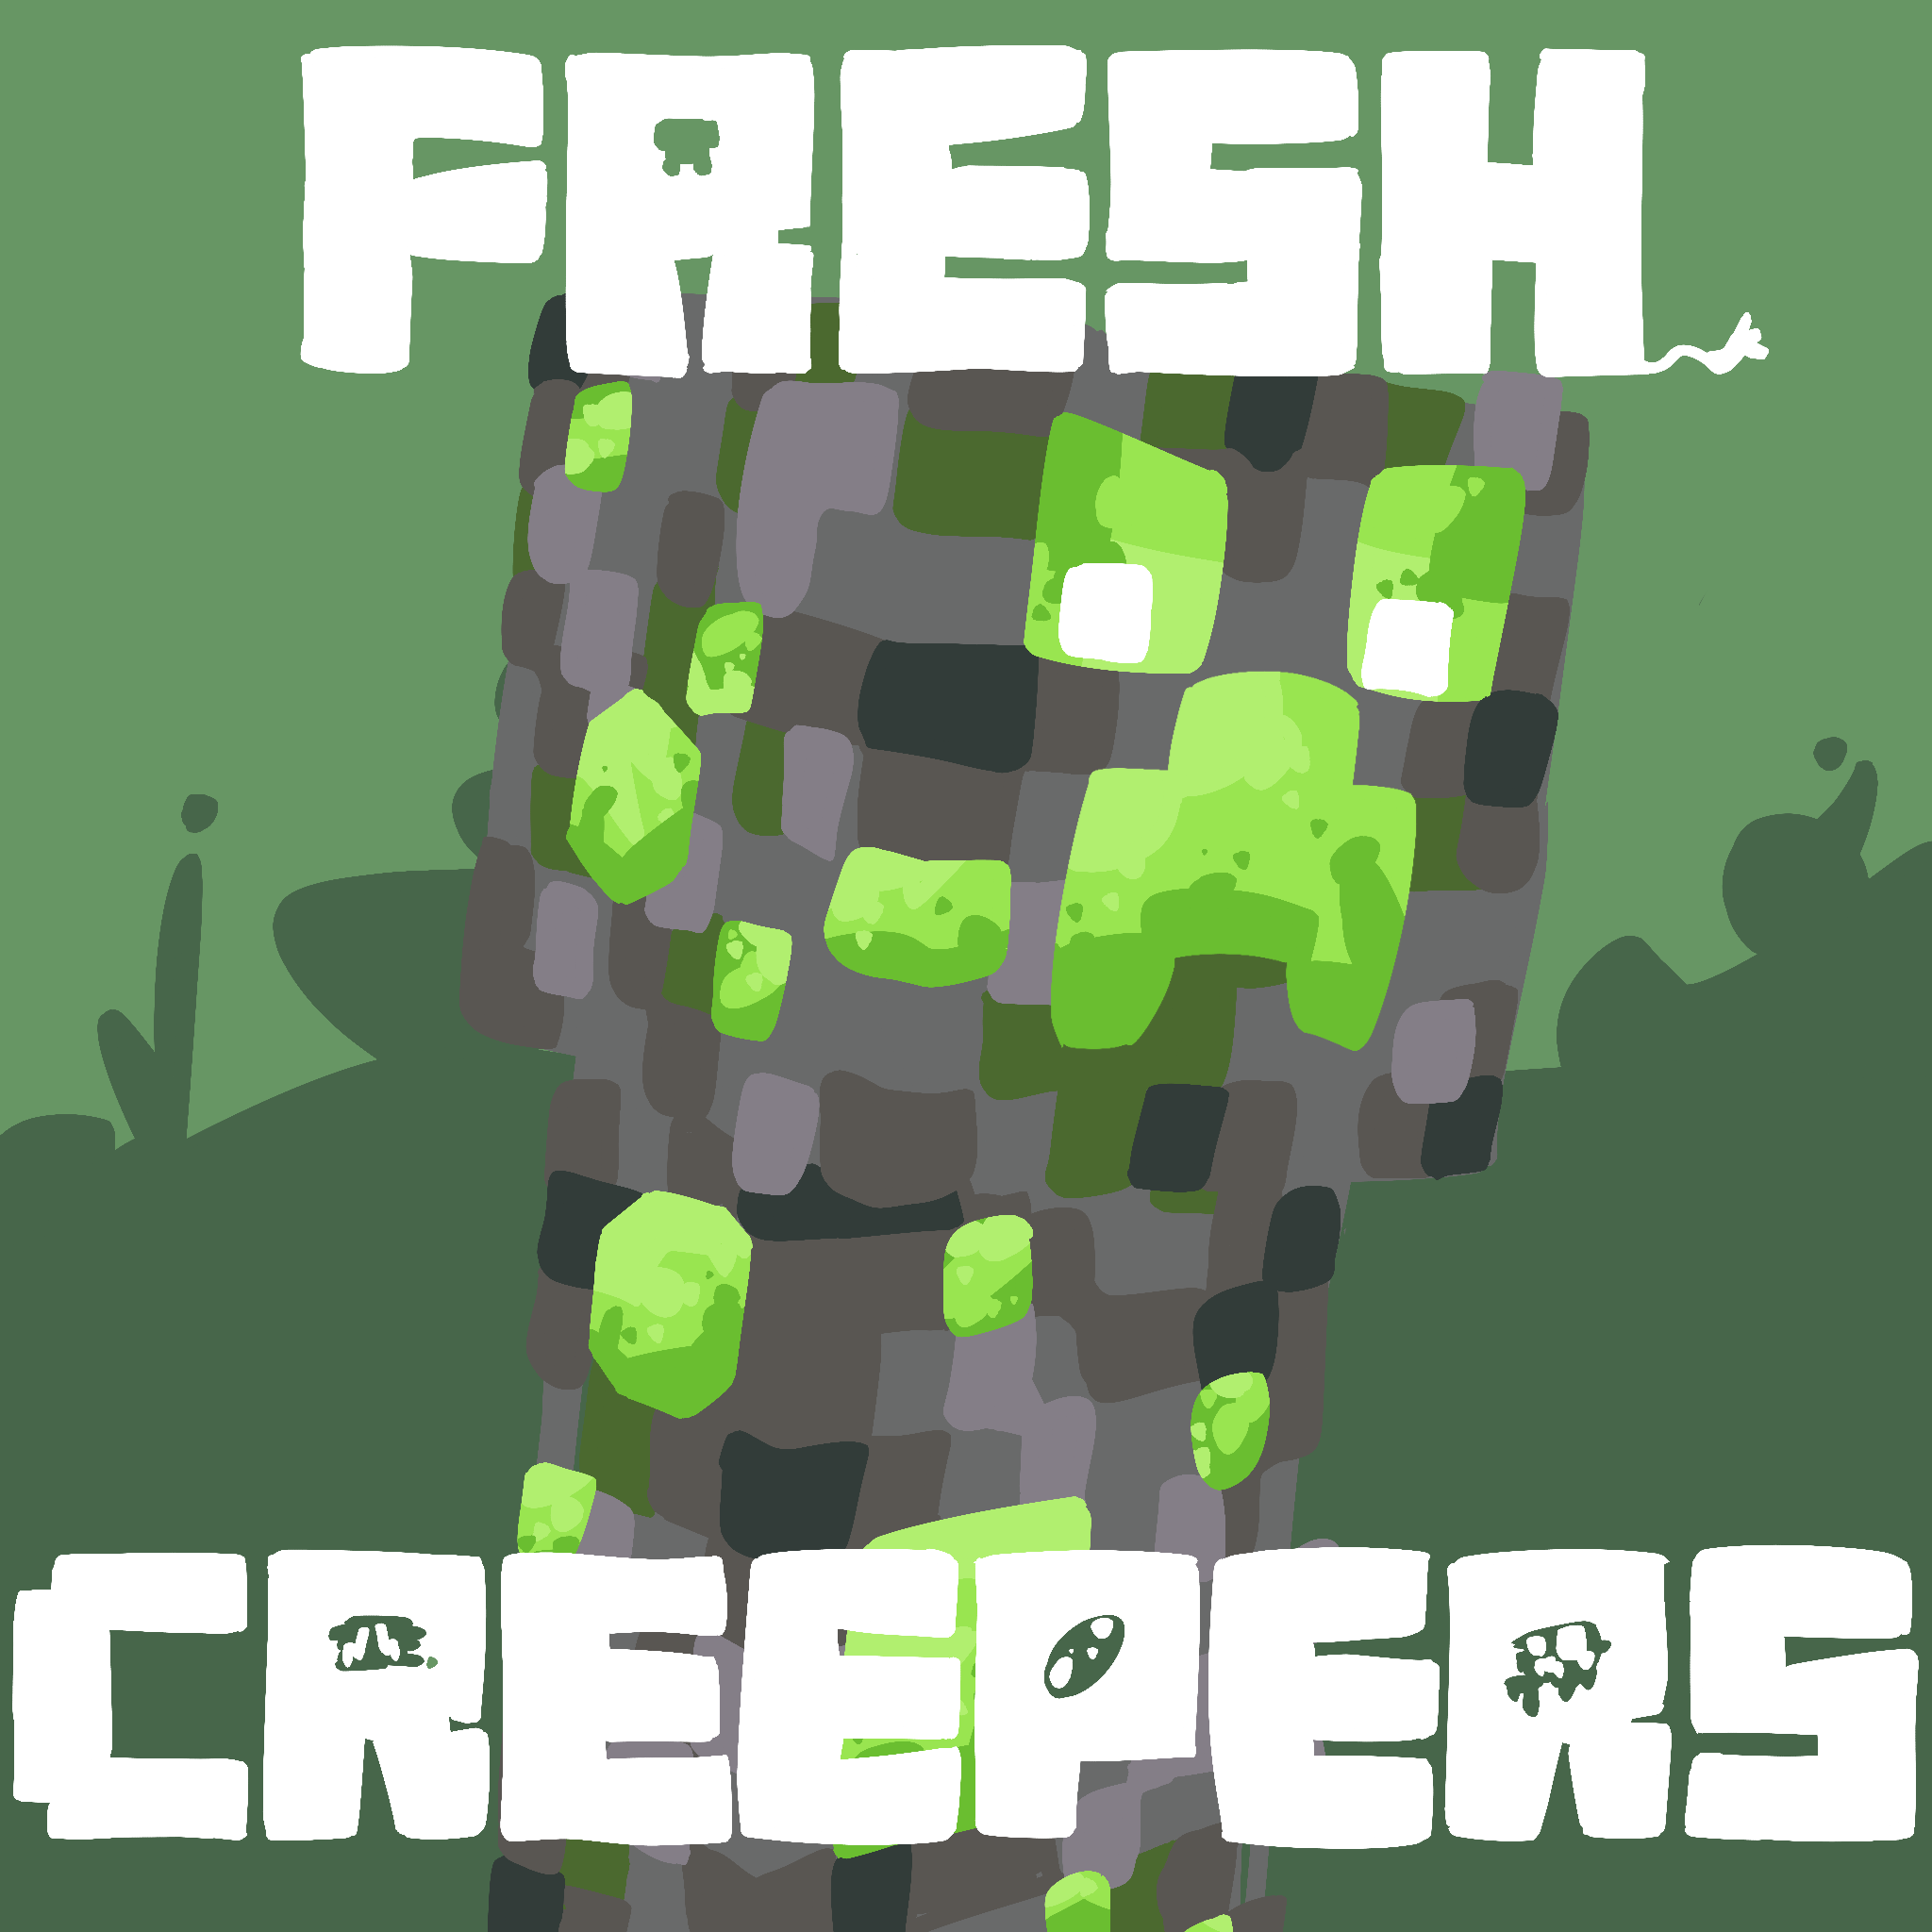 Fresh Animations - Minecraft Resource Packs - CurseForge